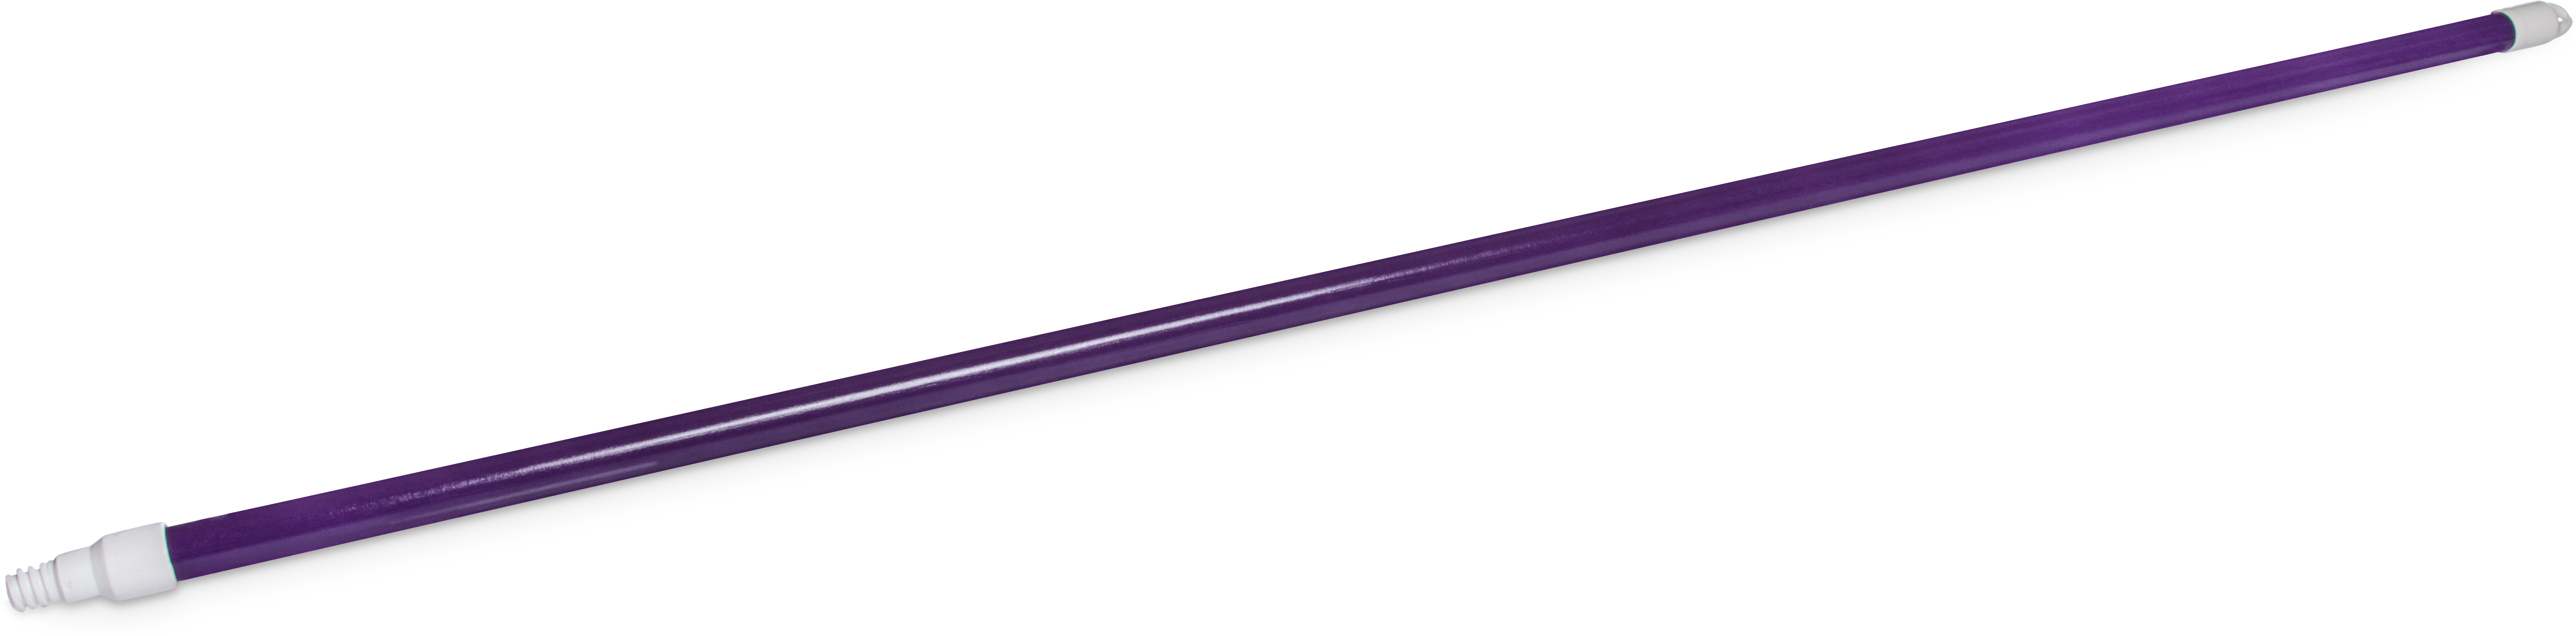 Sparta 60 Fiberglass Handle with Self-Locking Flex-Tip 60 Long/1 D - Purple